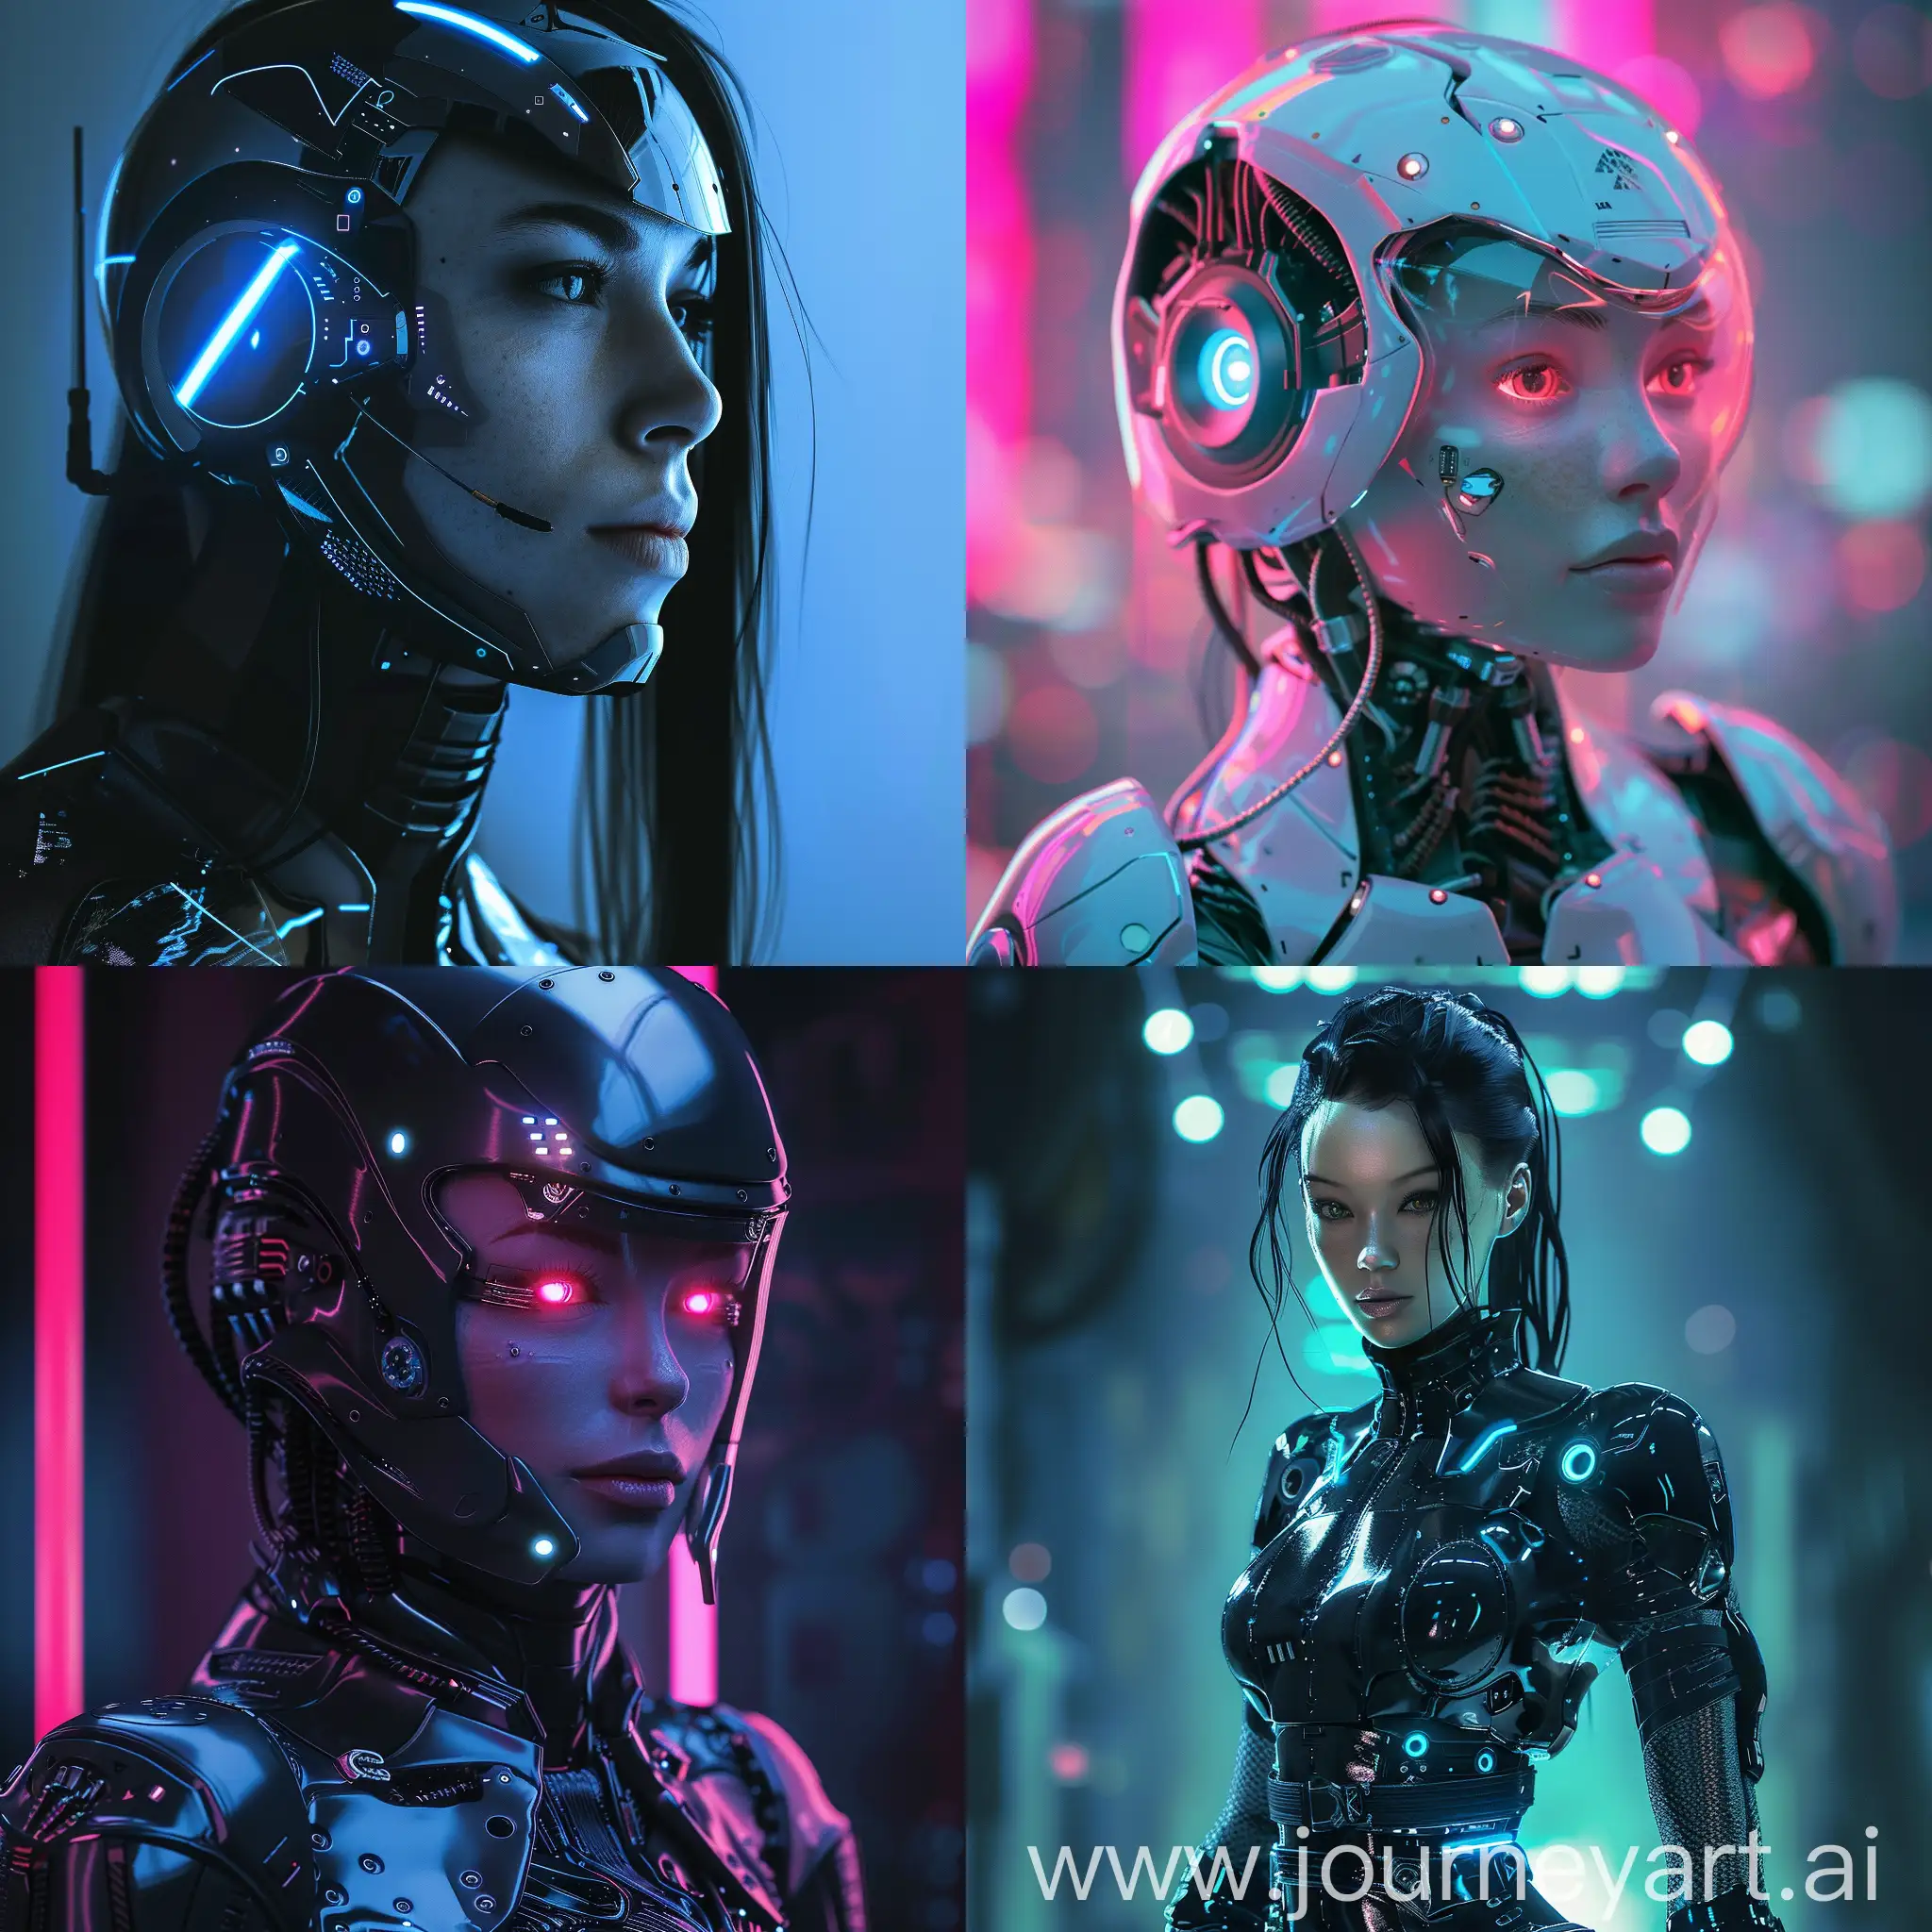 Futuristic-Cyberwoman-in-Virtual-Reality-Environment